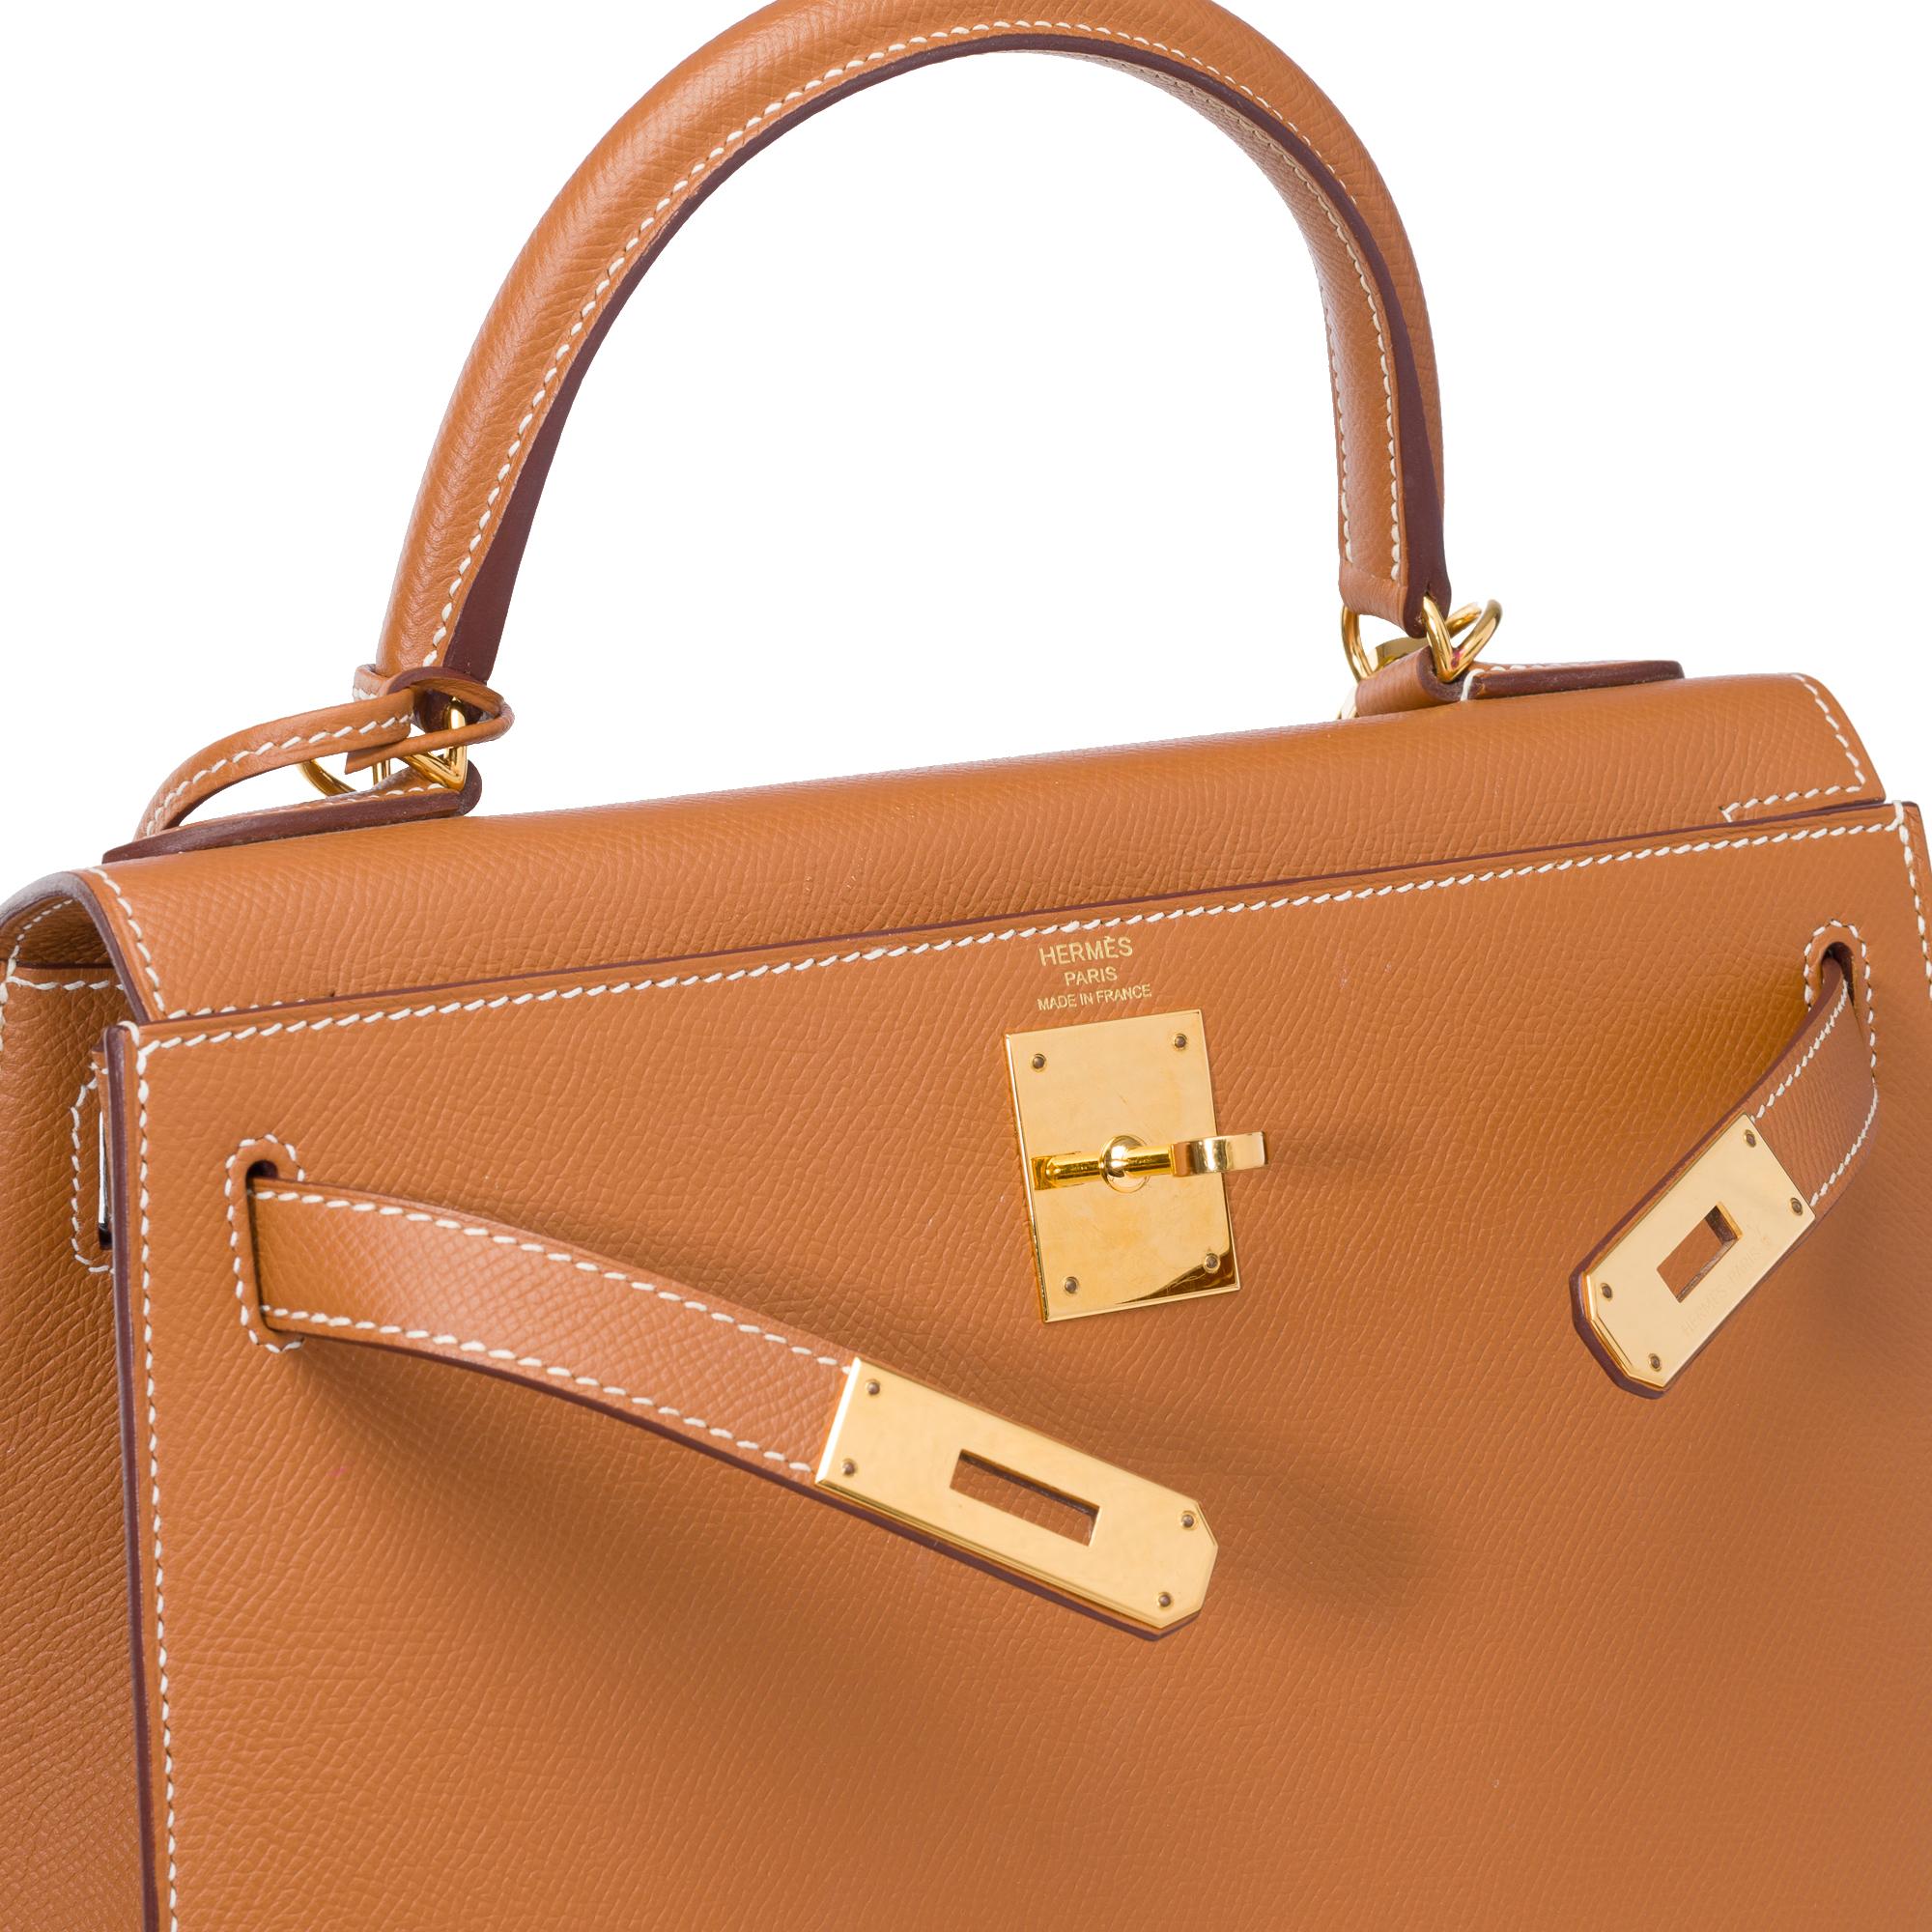 Amazing Hermès Kelly 28 sellier handbag strap in Camel/Gold Epsom leather, GHW 3